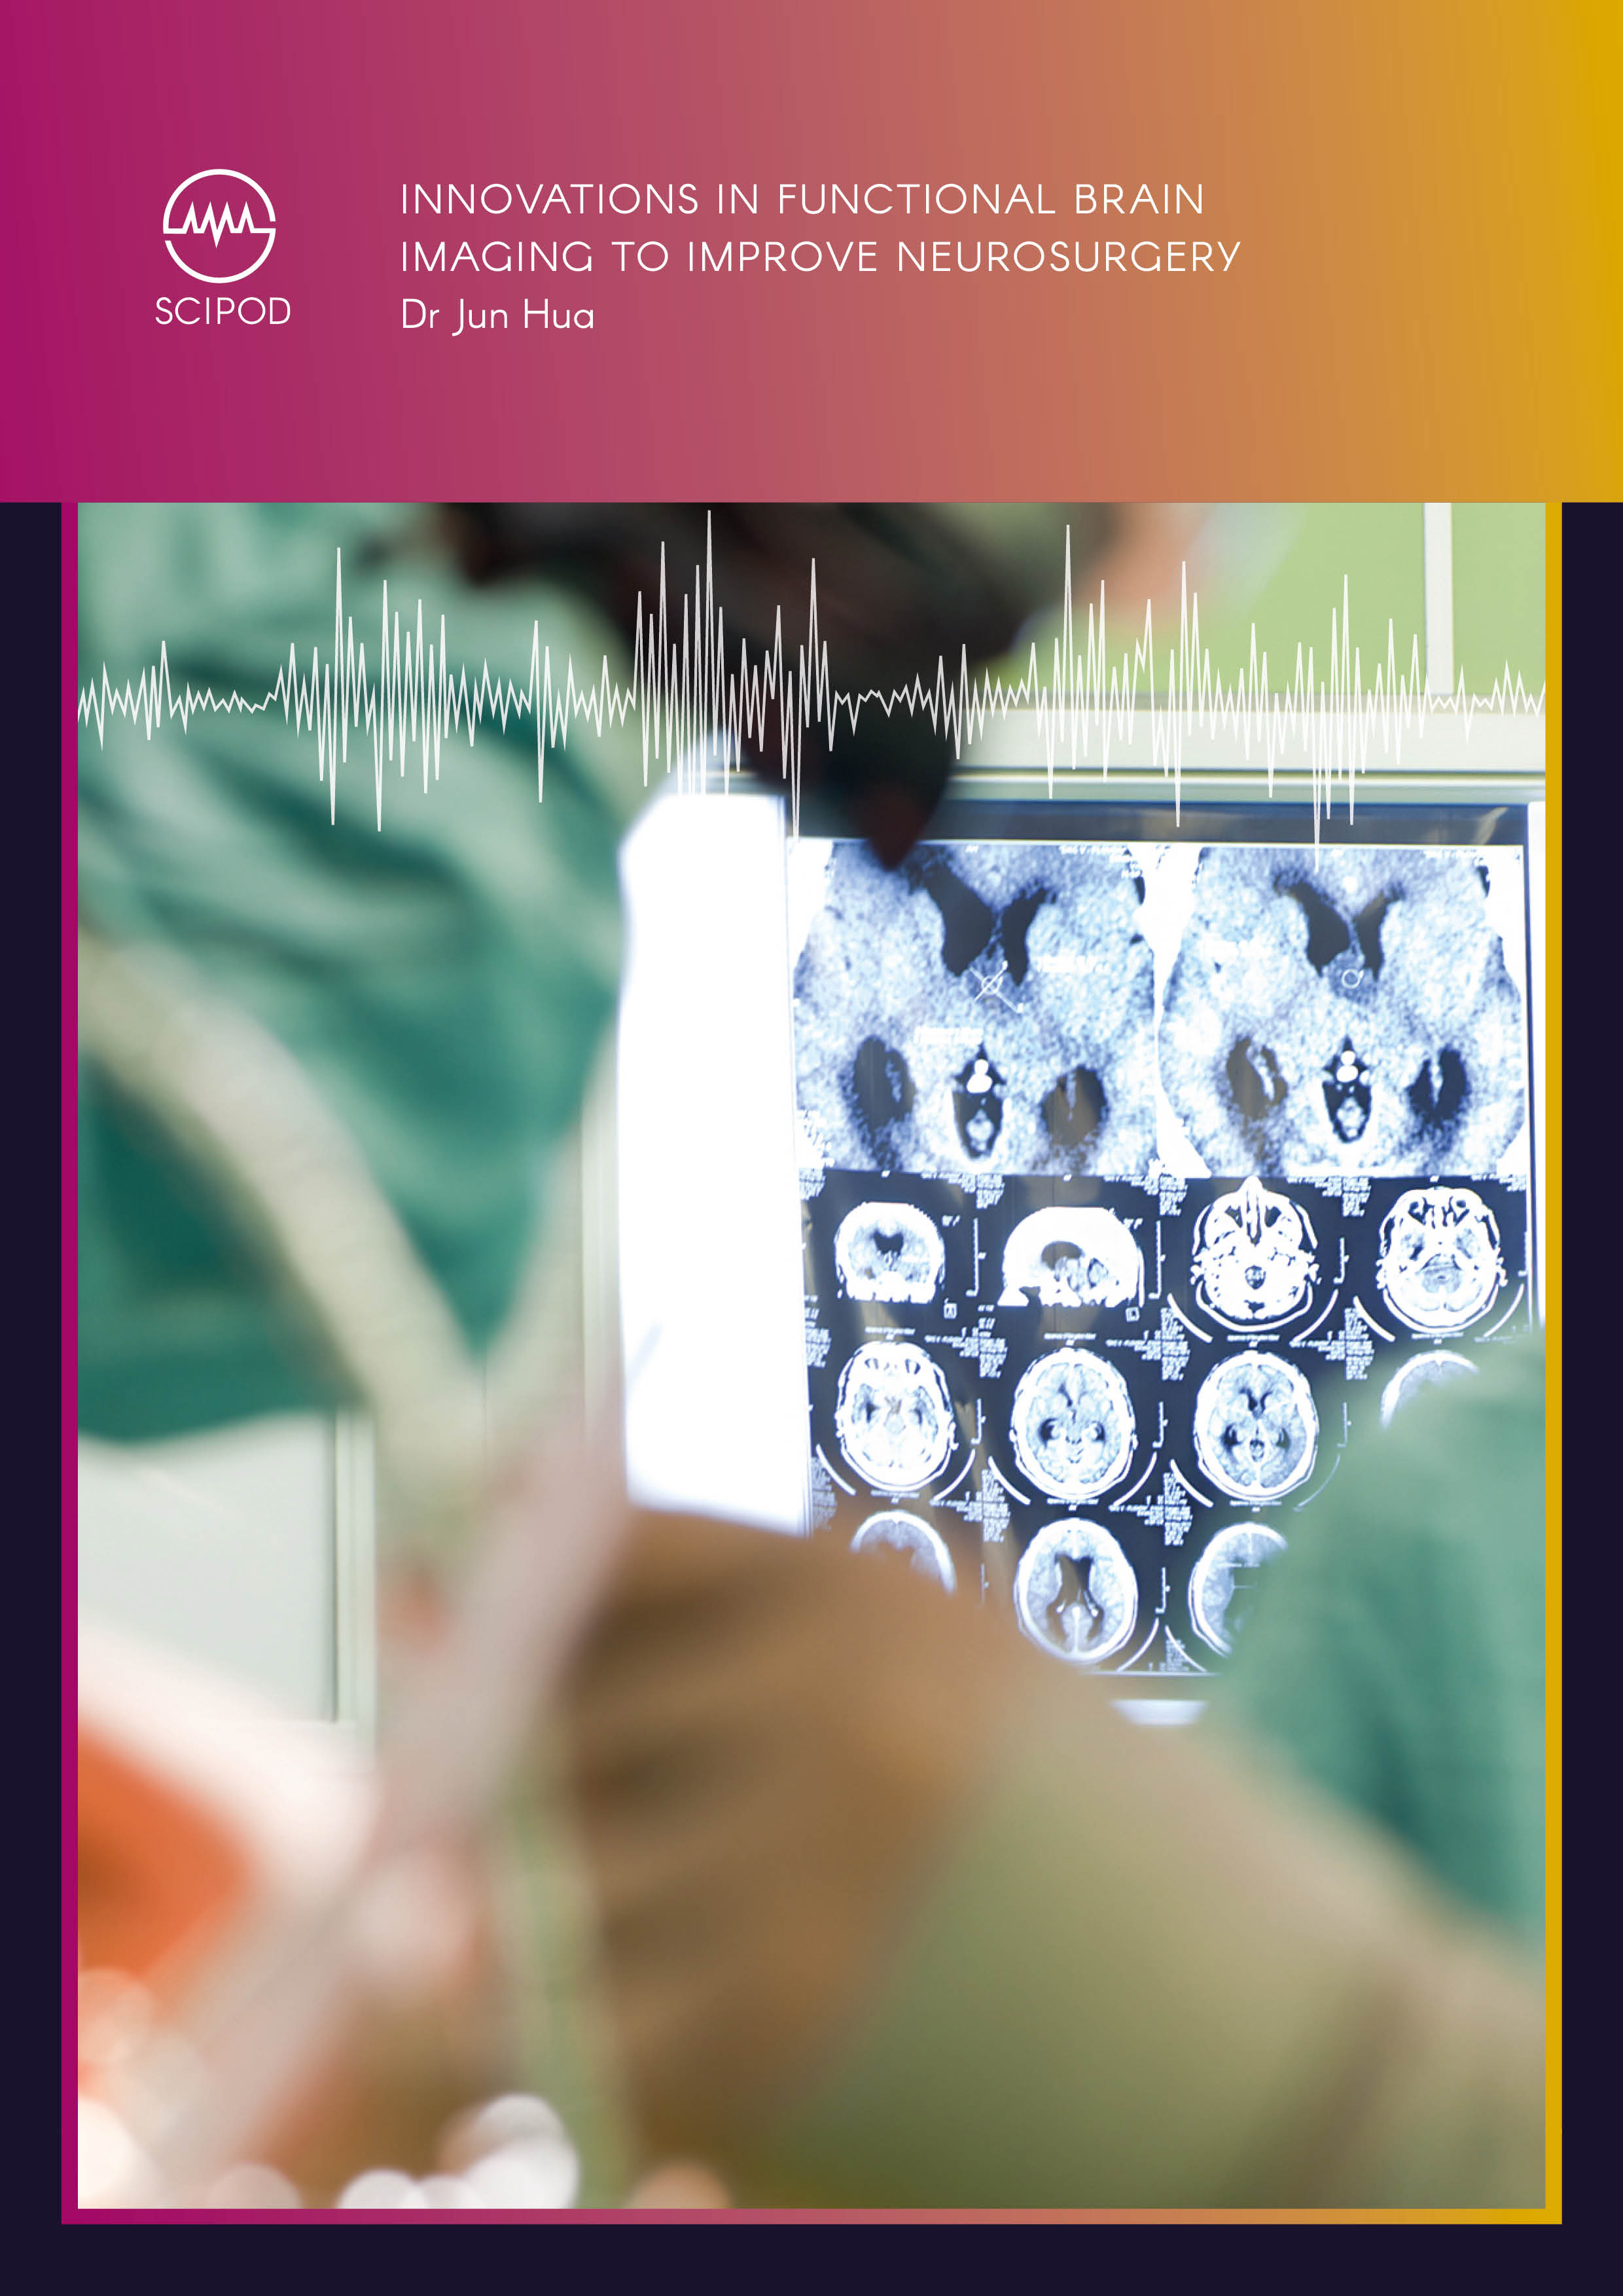 Innovations in Functional Brain Imaging to Improve Neurosurgery – Dr Jun Hua, Johns Hopkins University